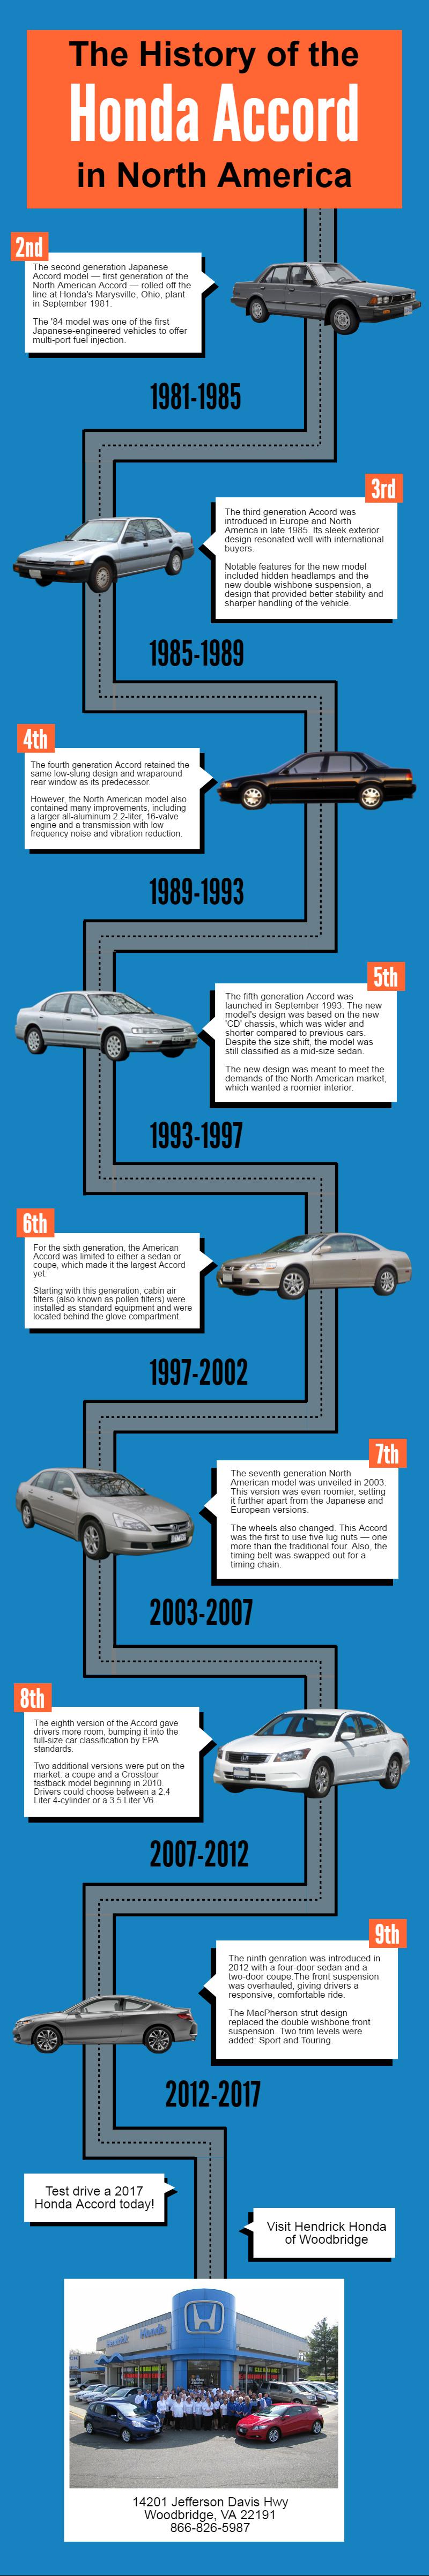 infographic of honda accord history